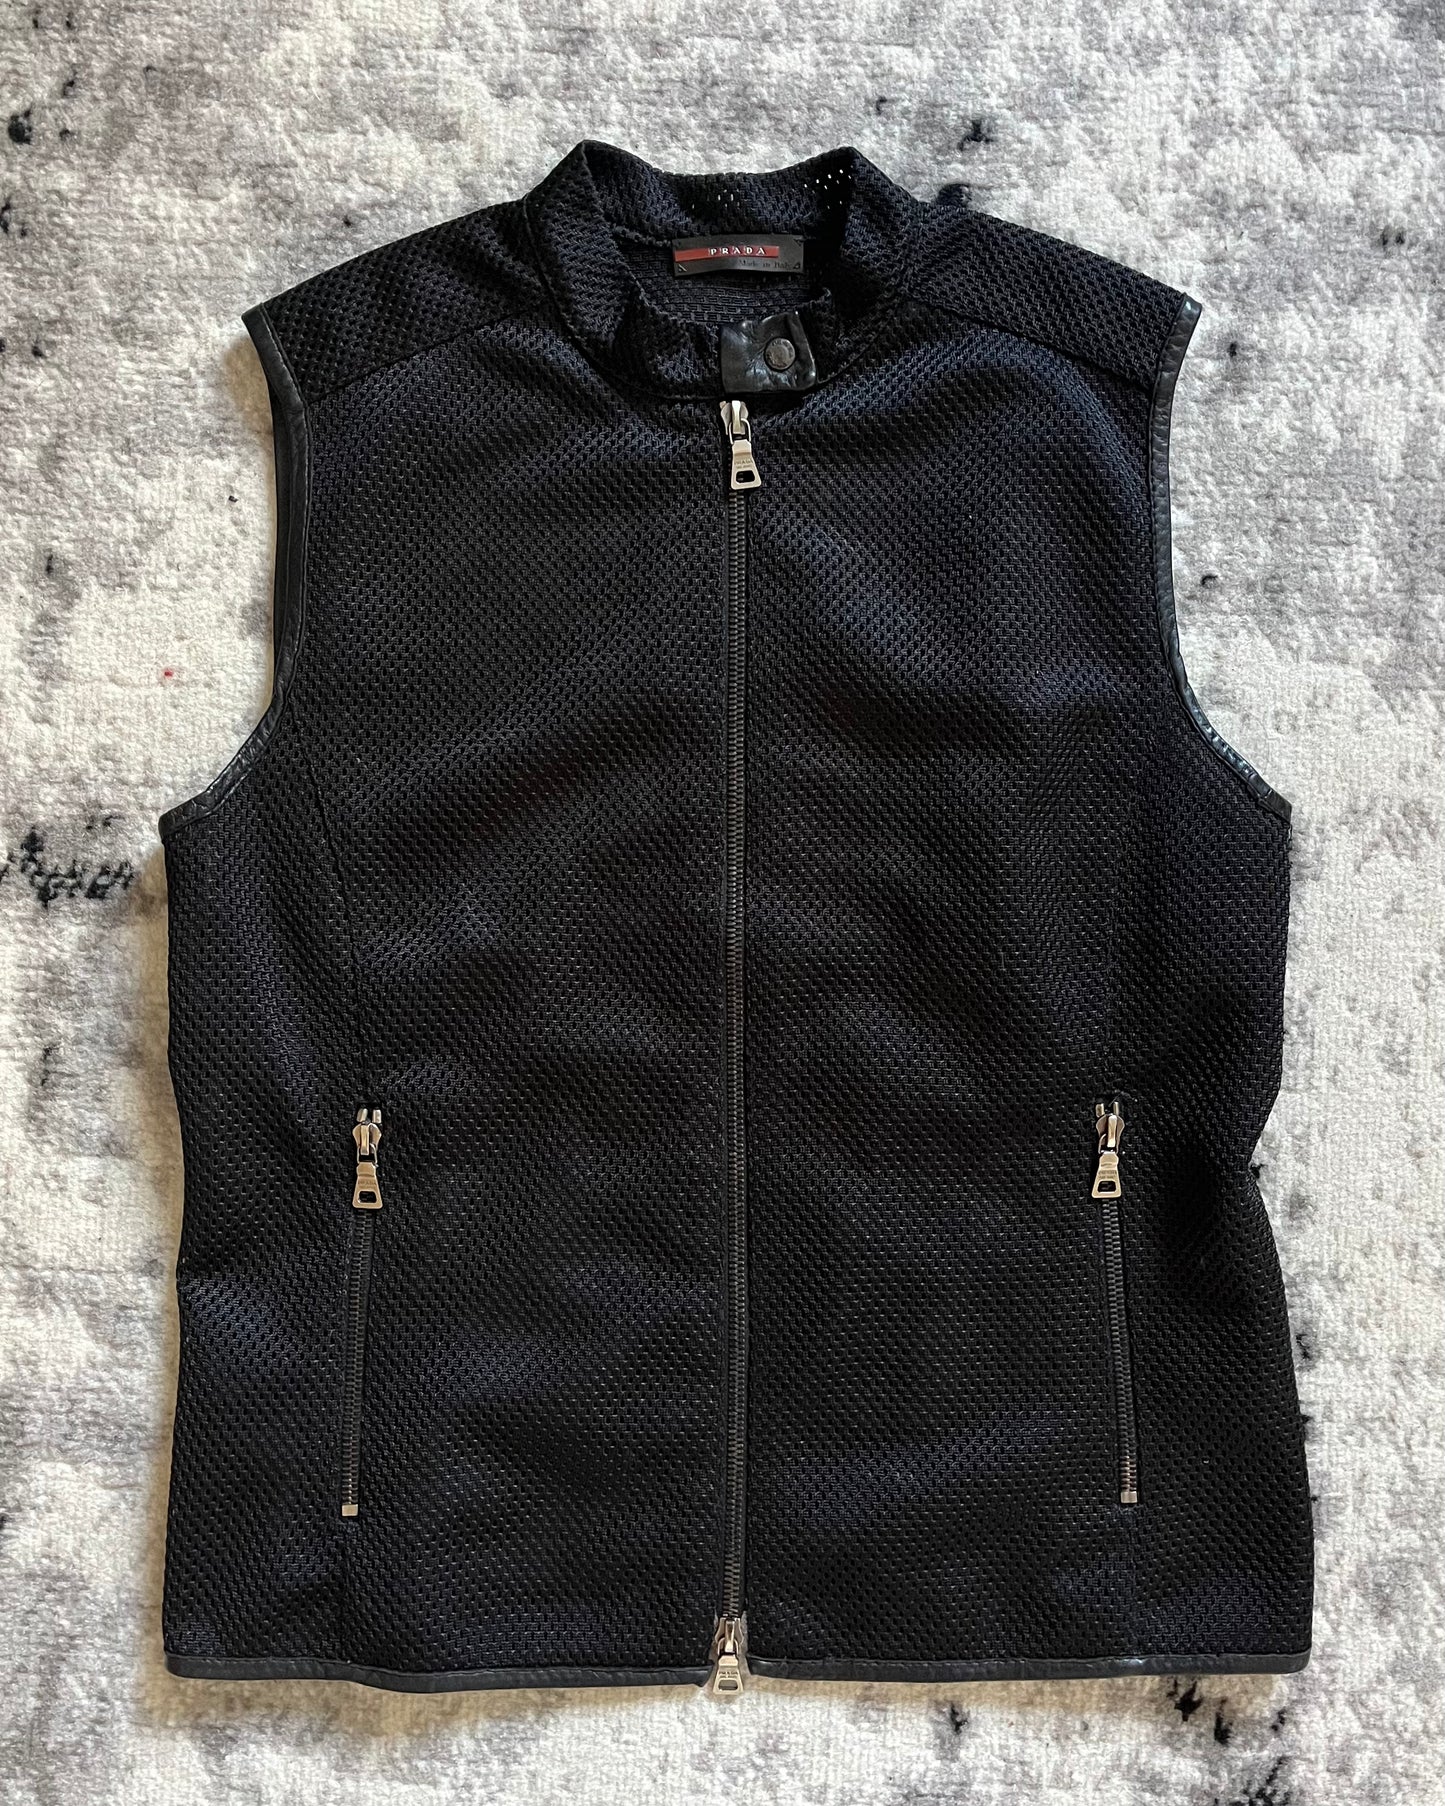 AW00 Prada Archive Black Sleeveless Jacket (S)